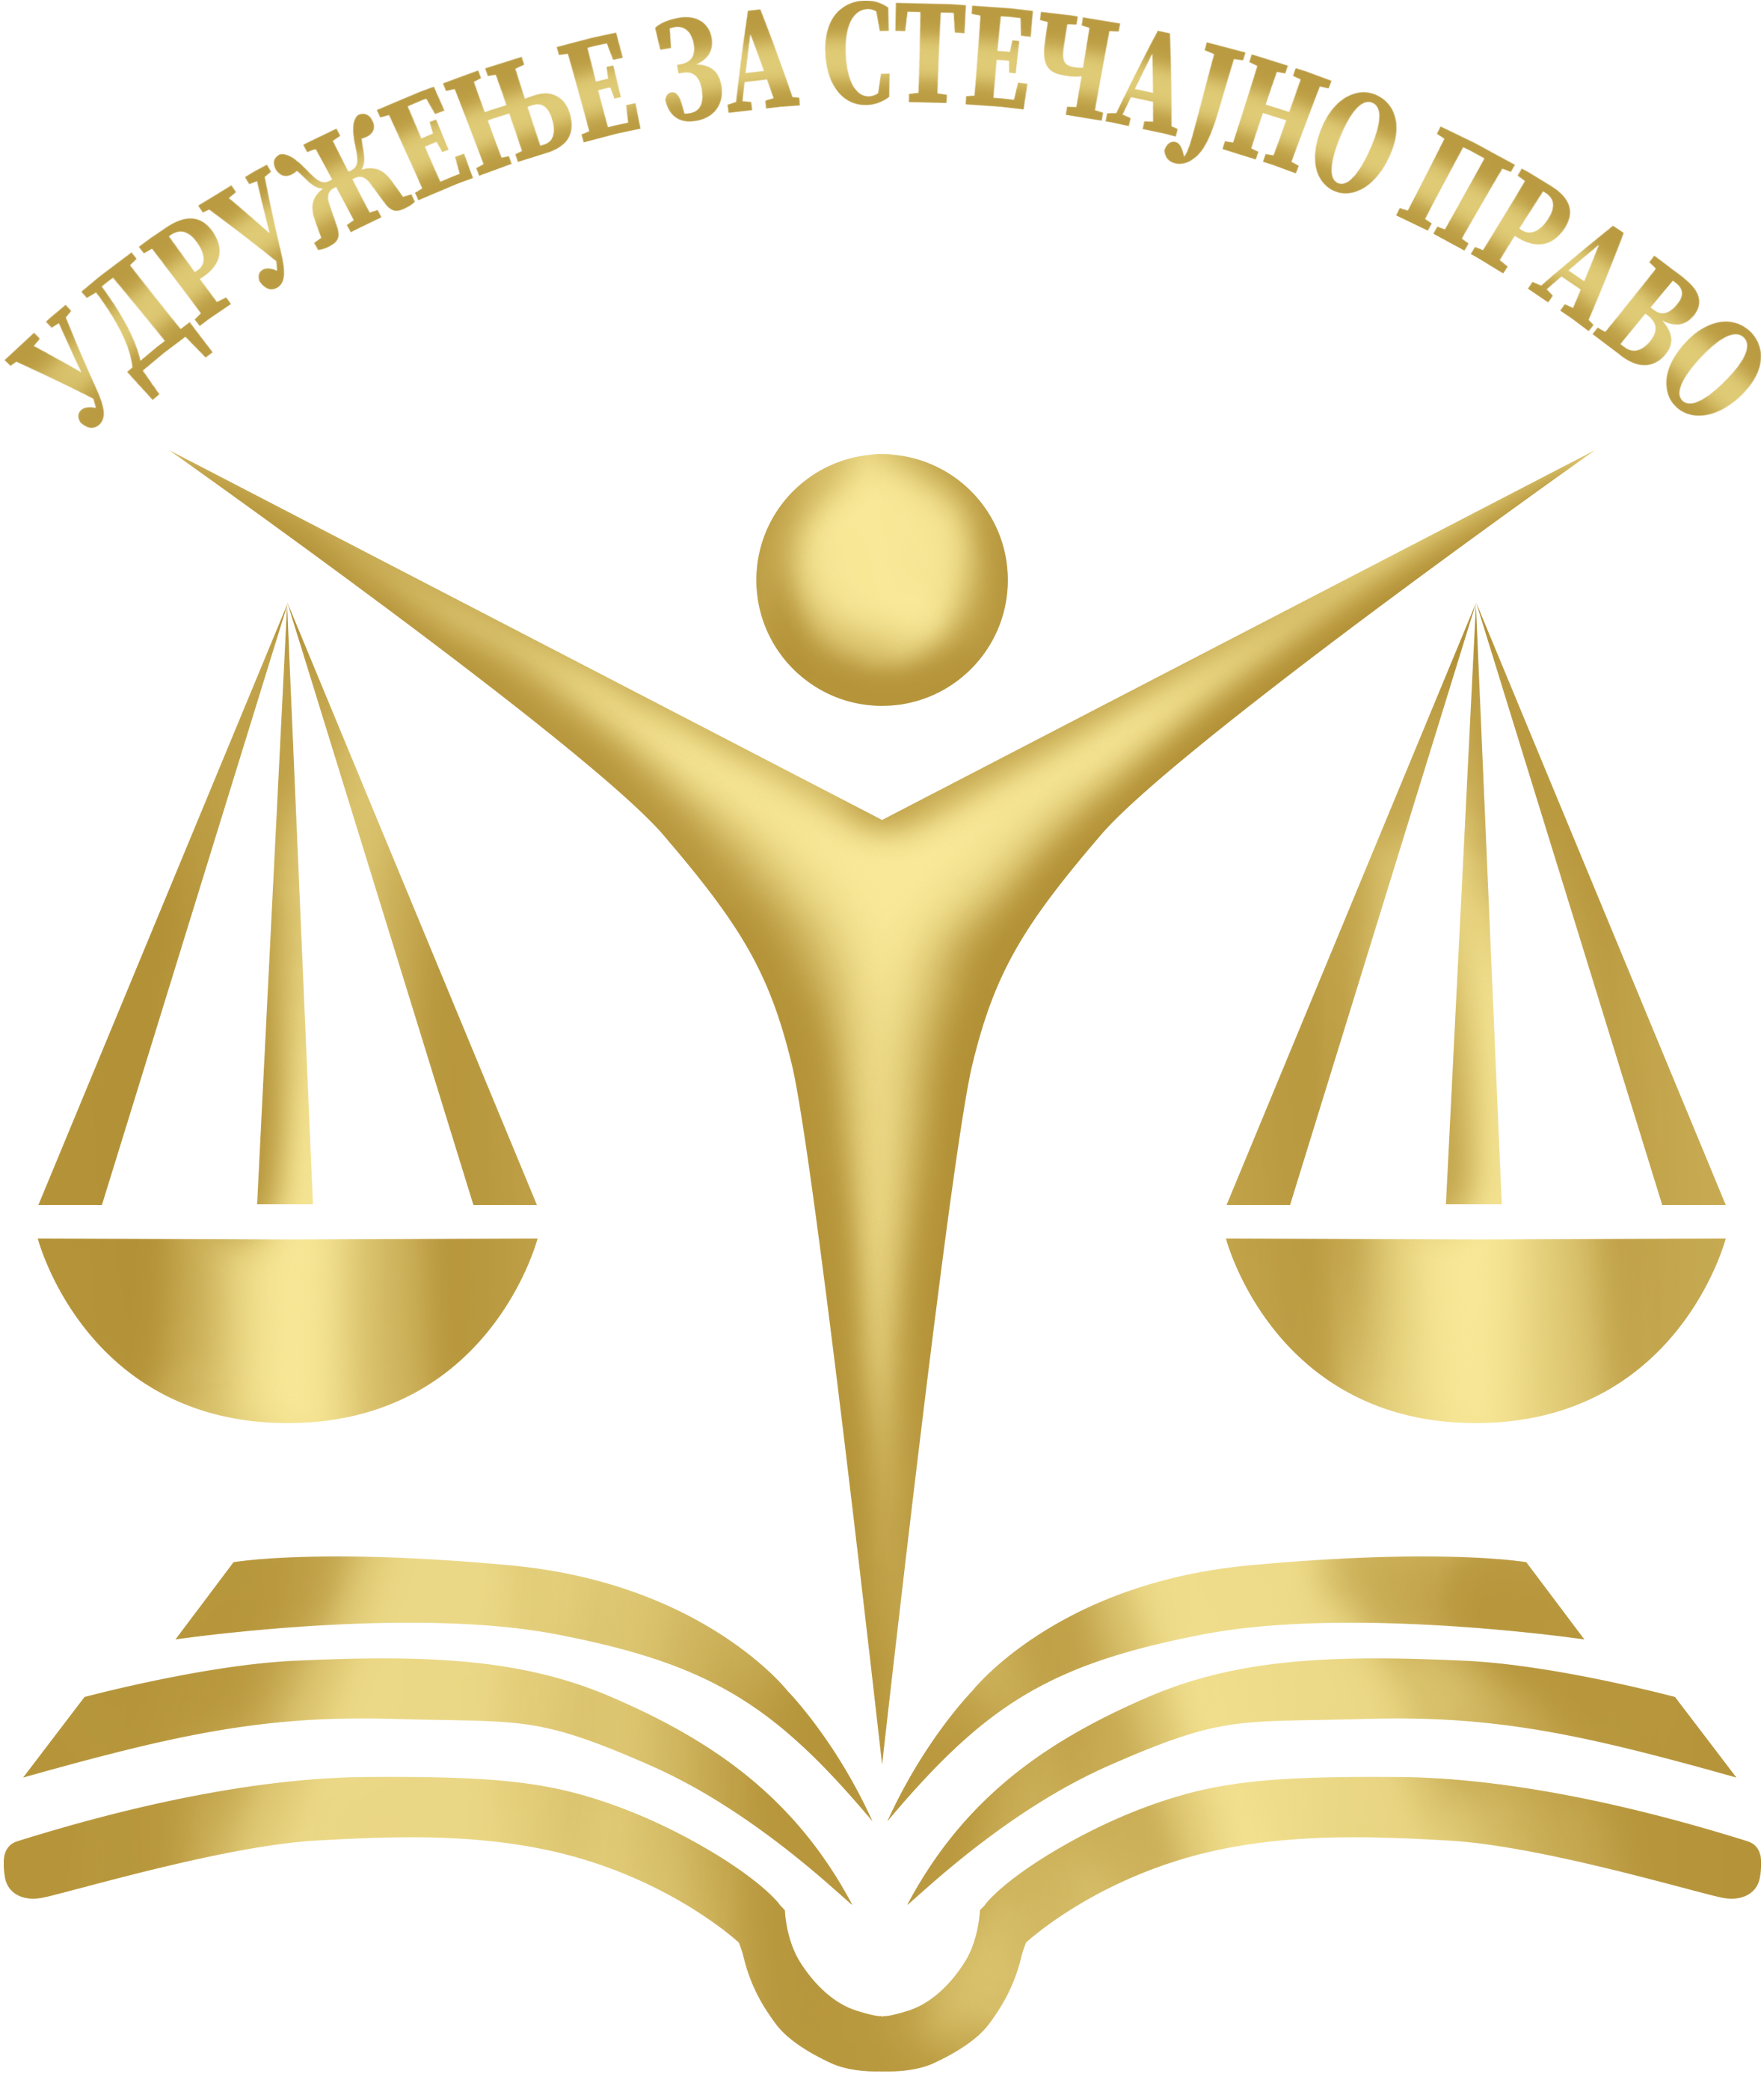 Serbian Association for Bankruptcy Law (SBLA)